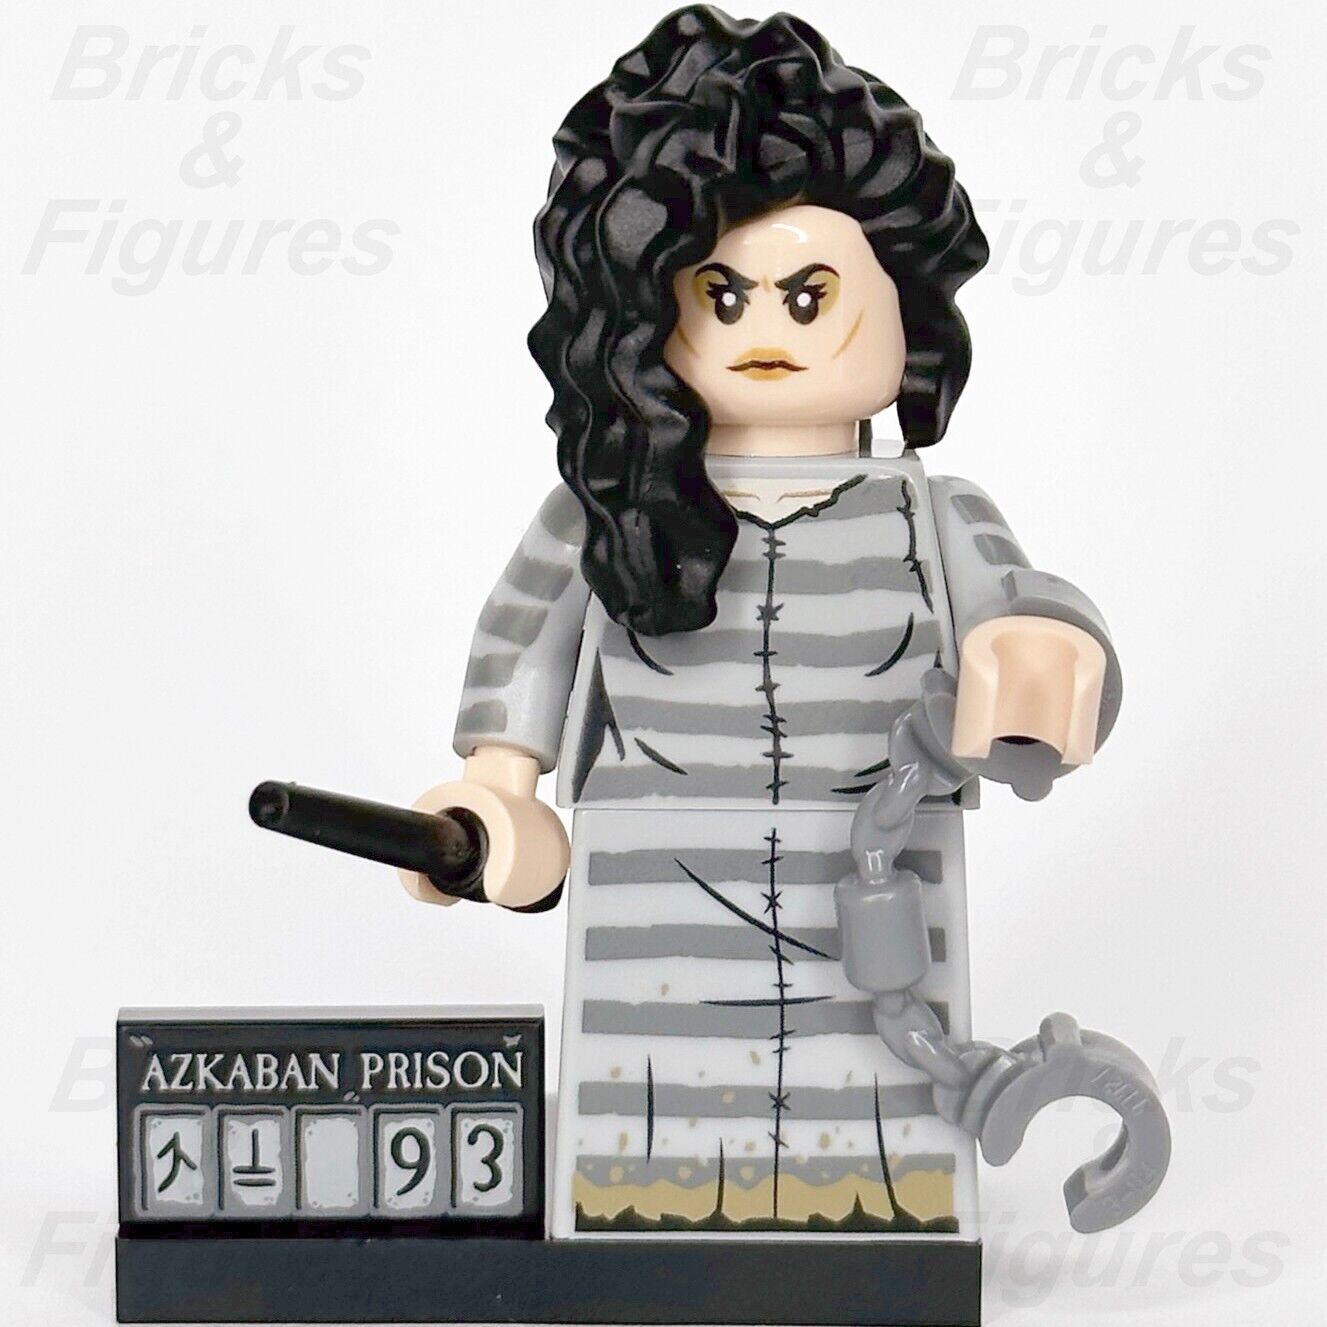 LEGO Harry Potter Bellatrix Lestrange Minifigure Series 2 Prisoner Outfit 71028 - Bricks & Figures